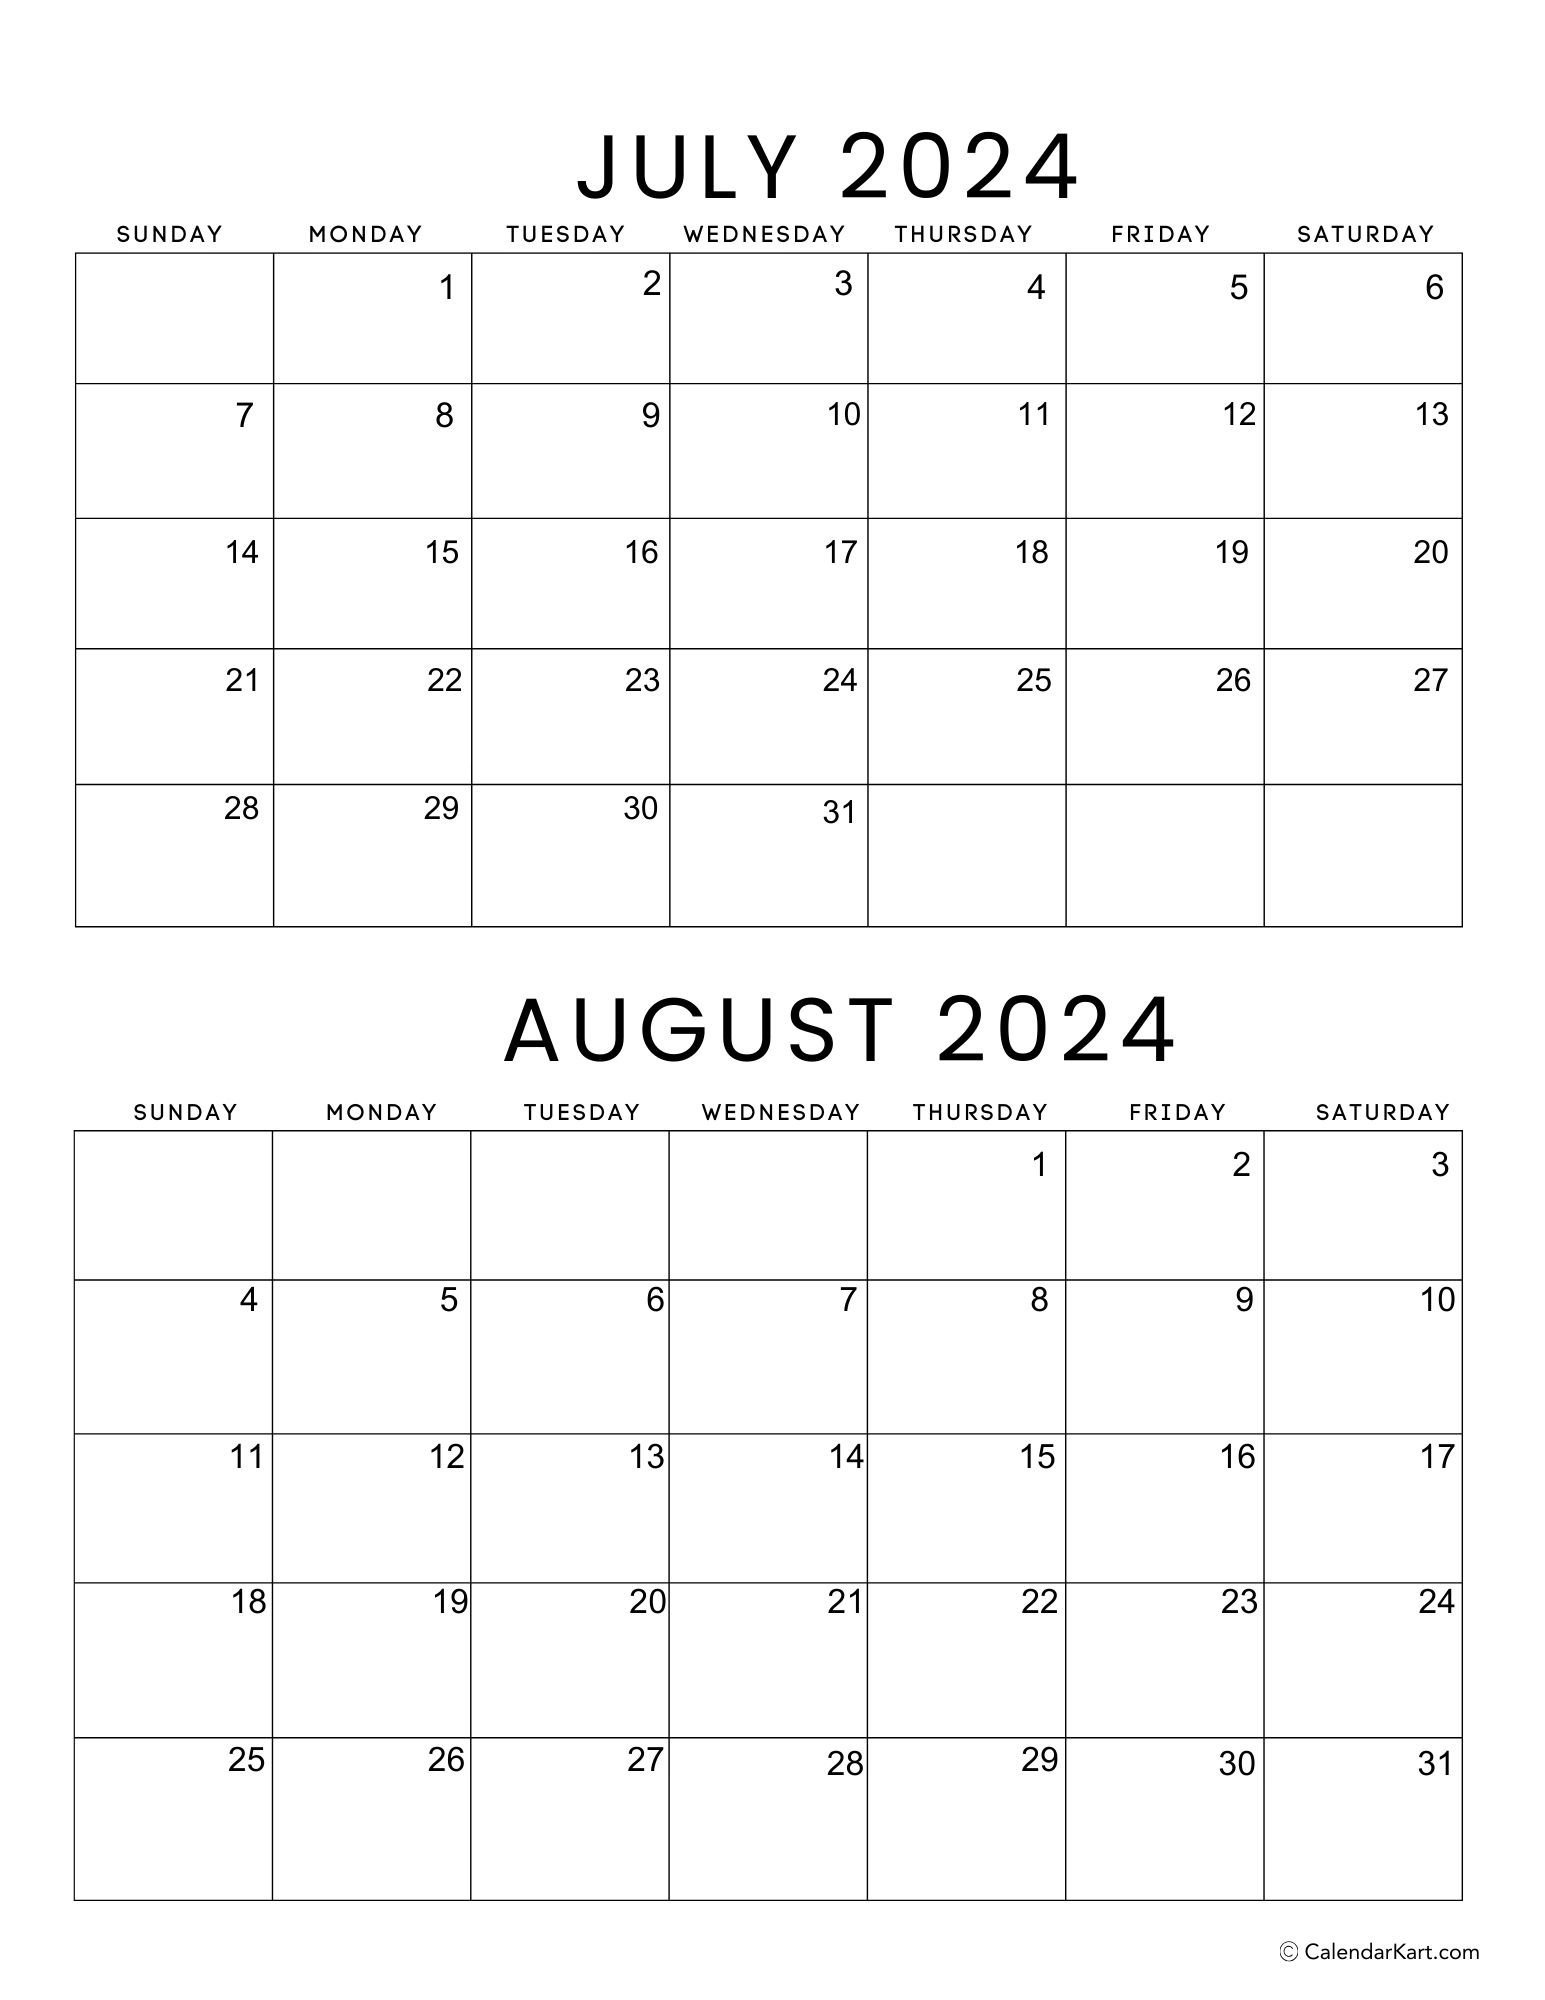 Printable July August 2024 Calendar | Calendarkart with Free Printable Calendar July and August 2024